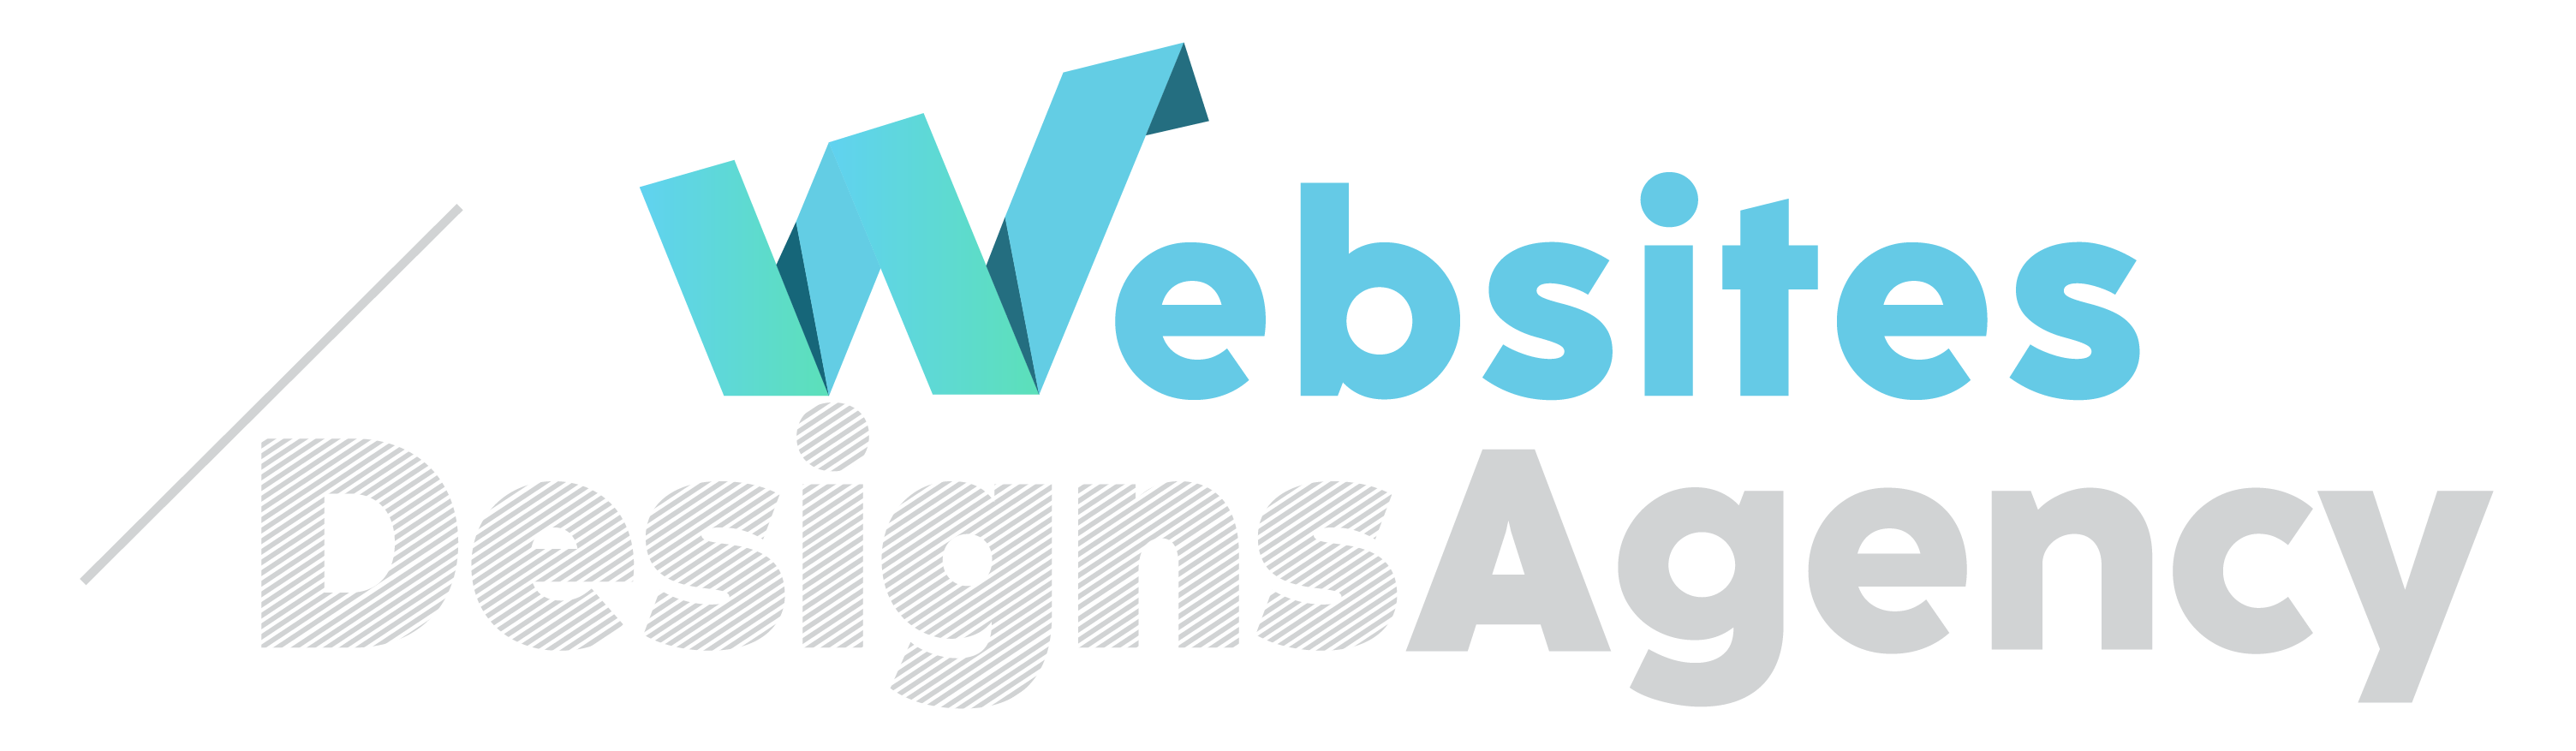 website designs agency